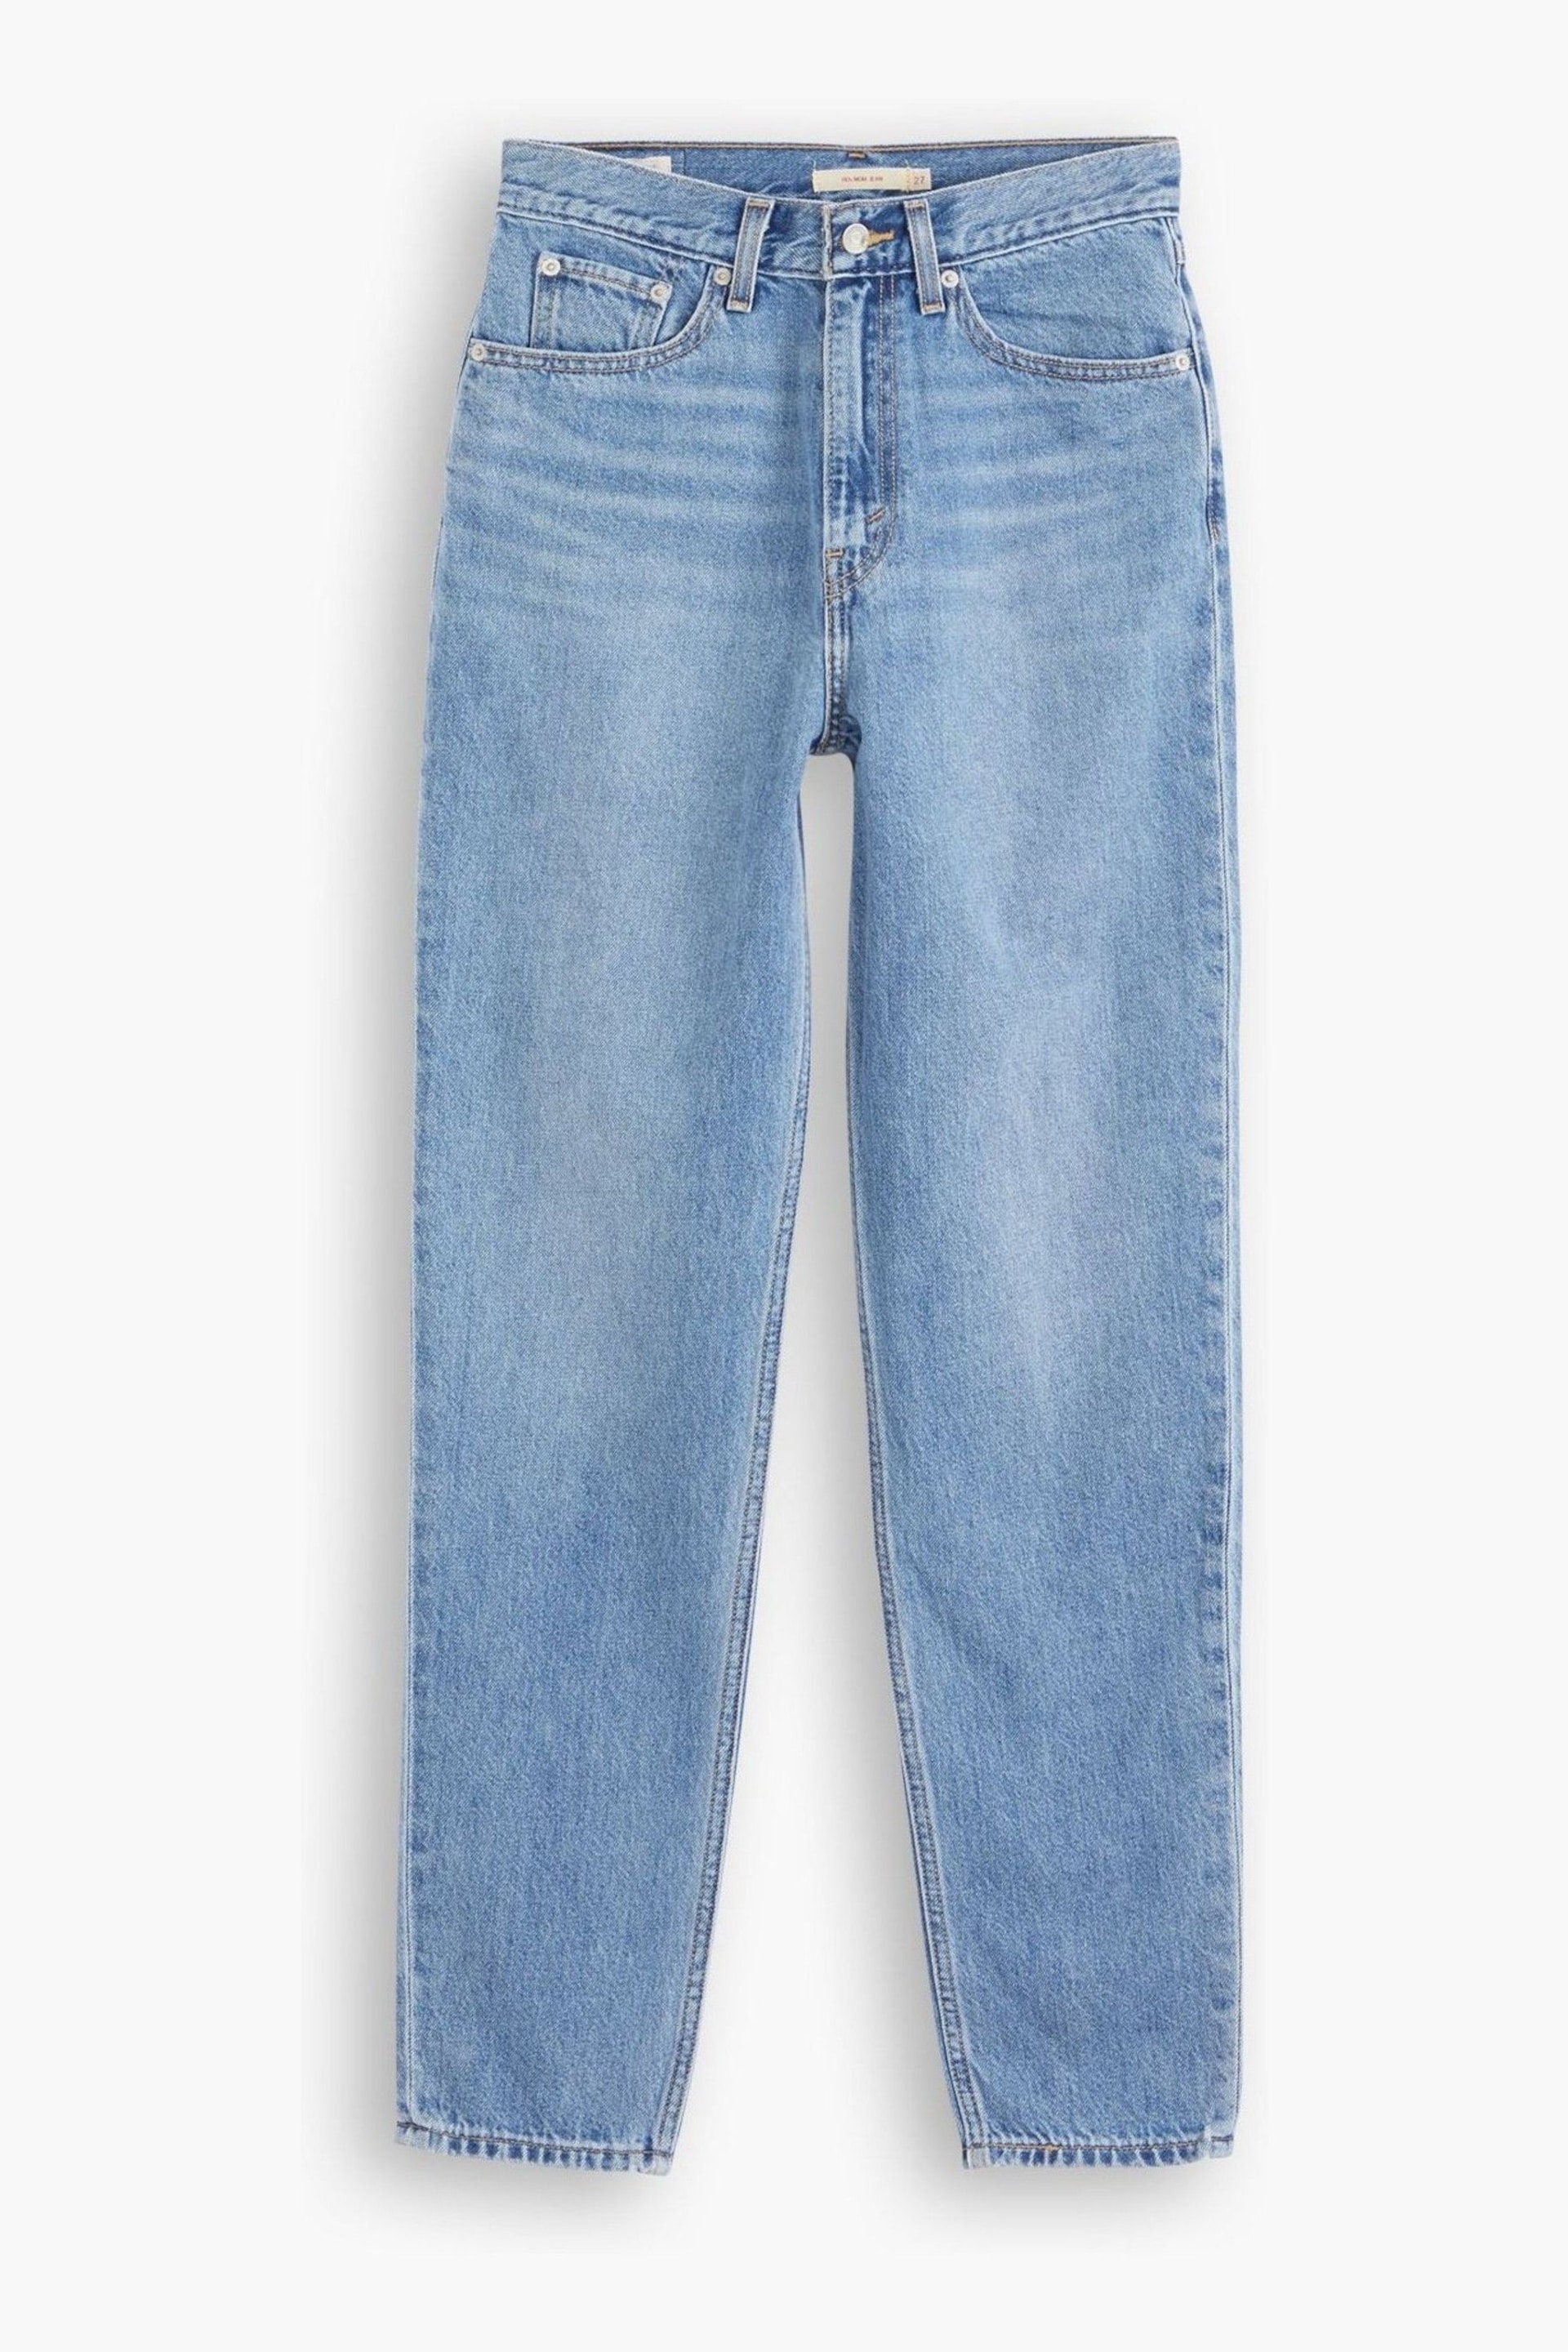 Levi's® Denim Light Wash 80s Mom Jeans - Image 5 of 7